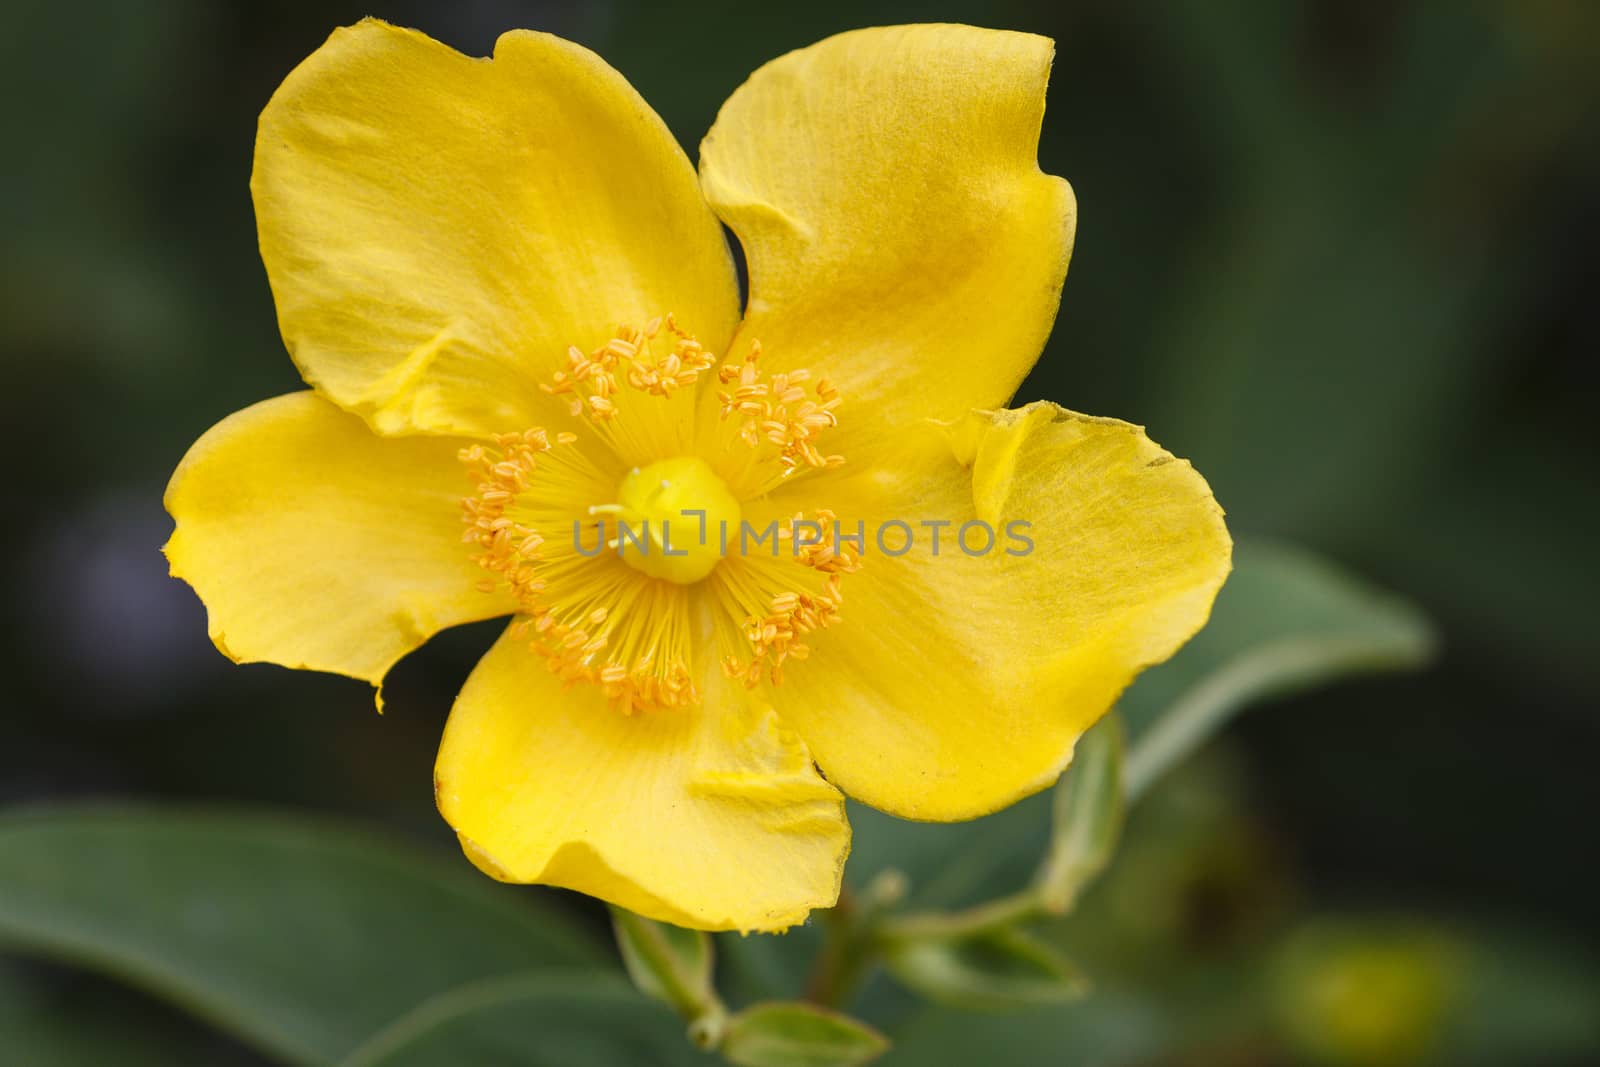 Hypericum - a yellow blossom - close-up